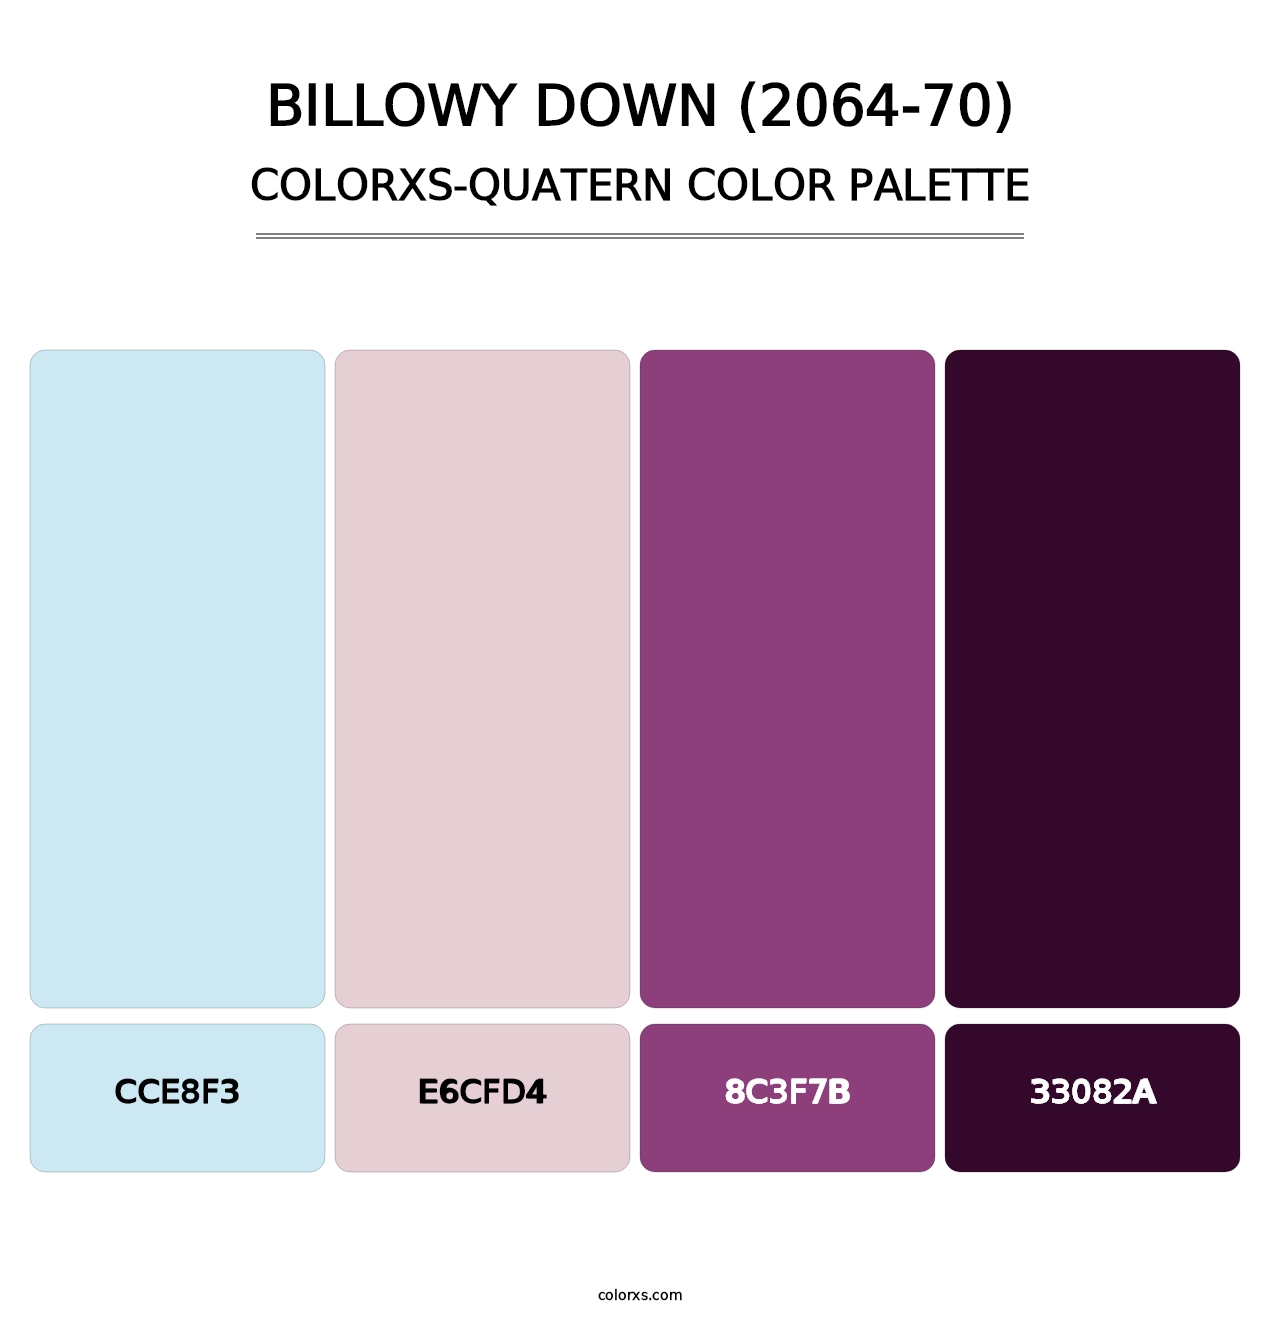 Billowy Down (2064-70) - Colorxs Quatern Palette